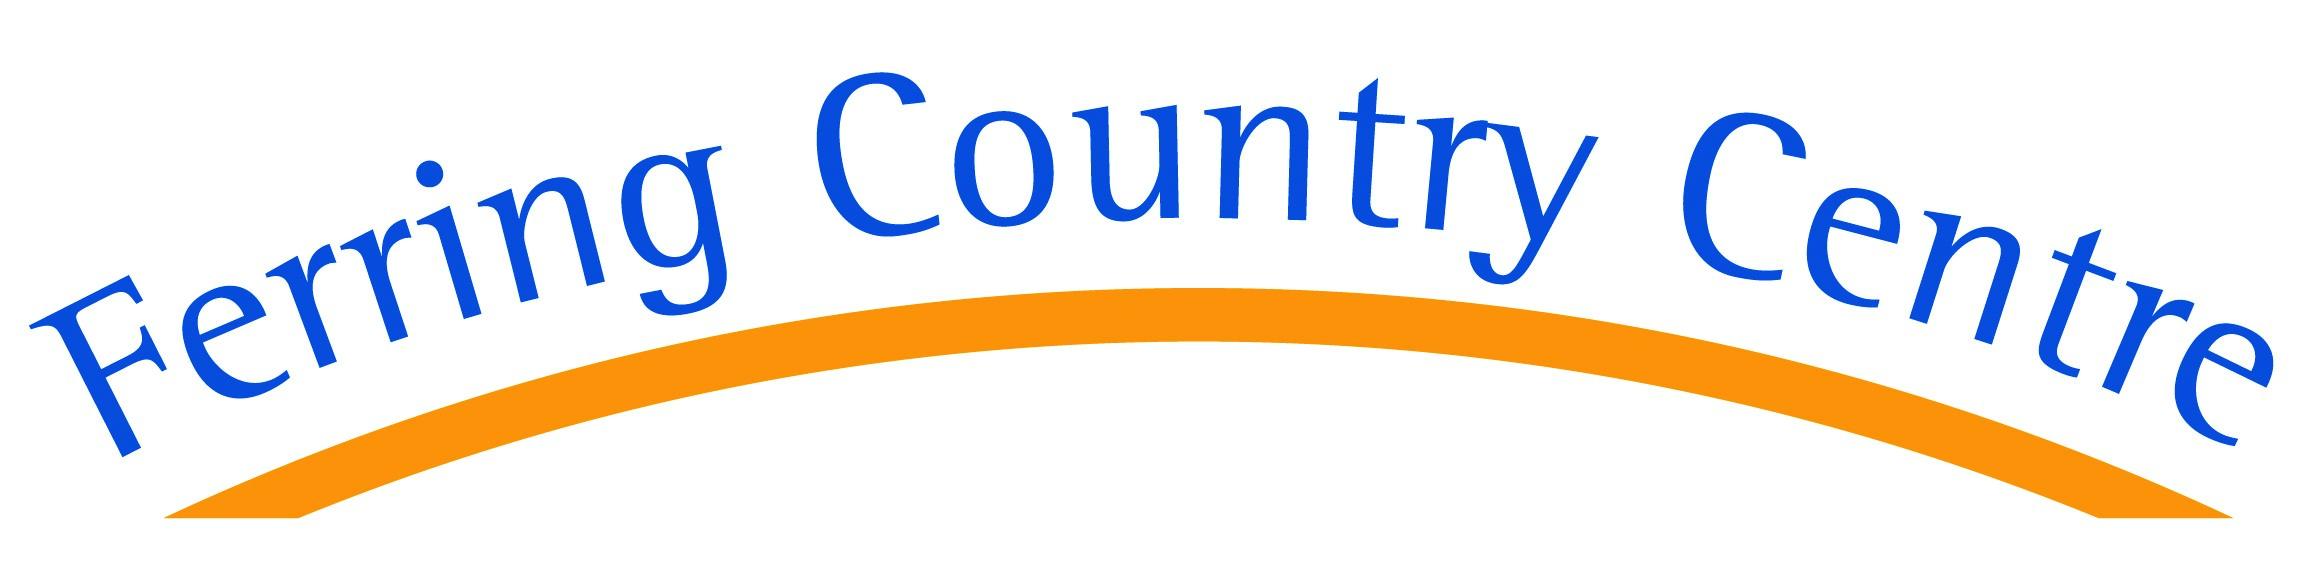 logo for Ferring Country Centre